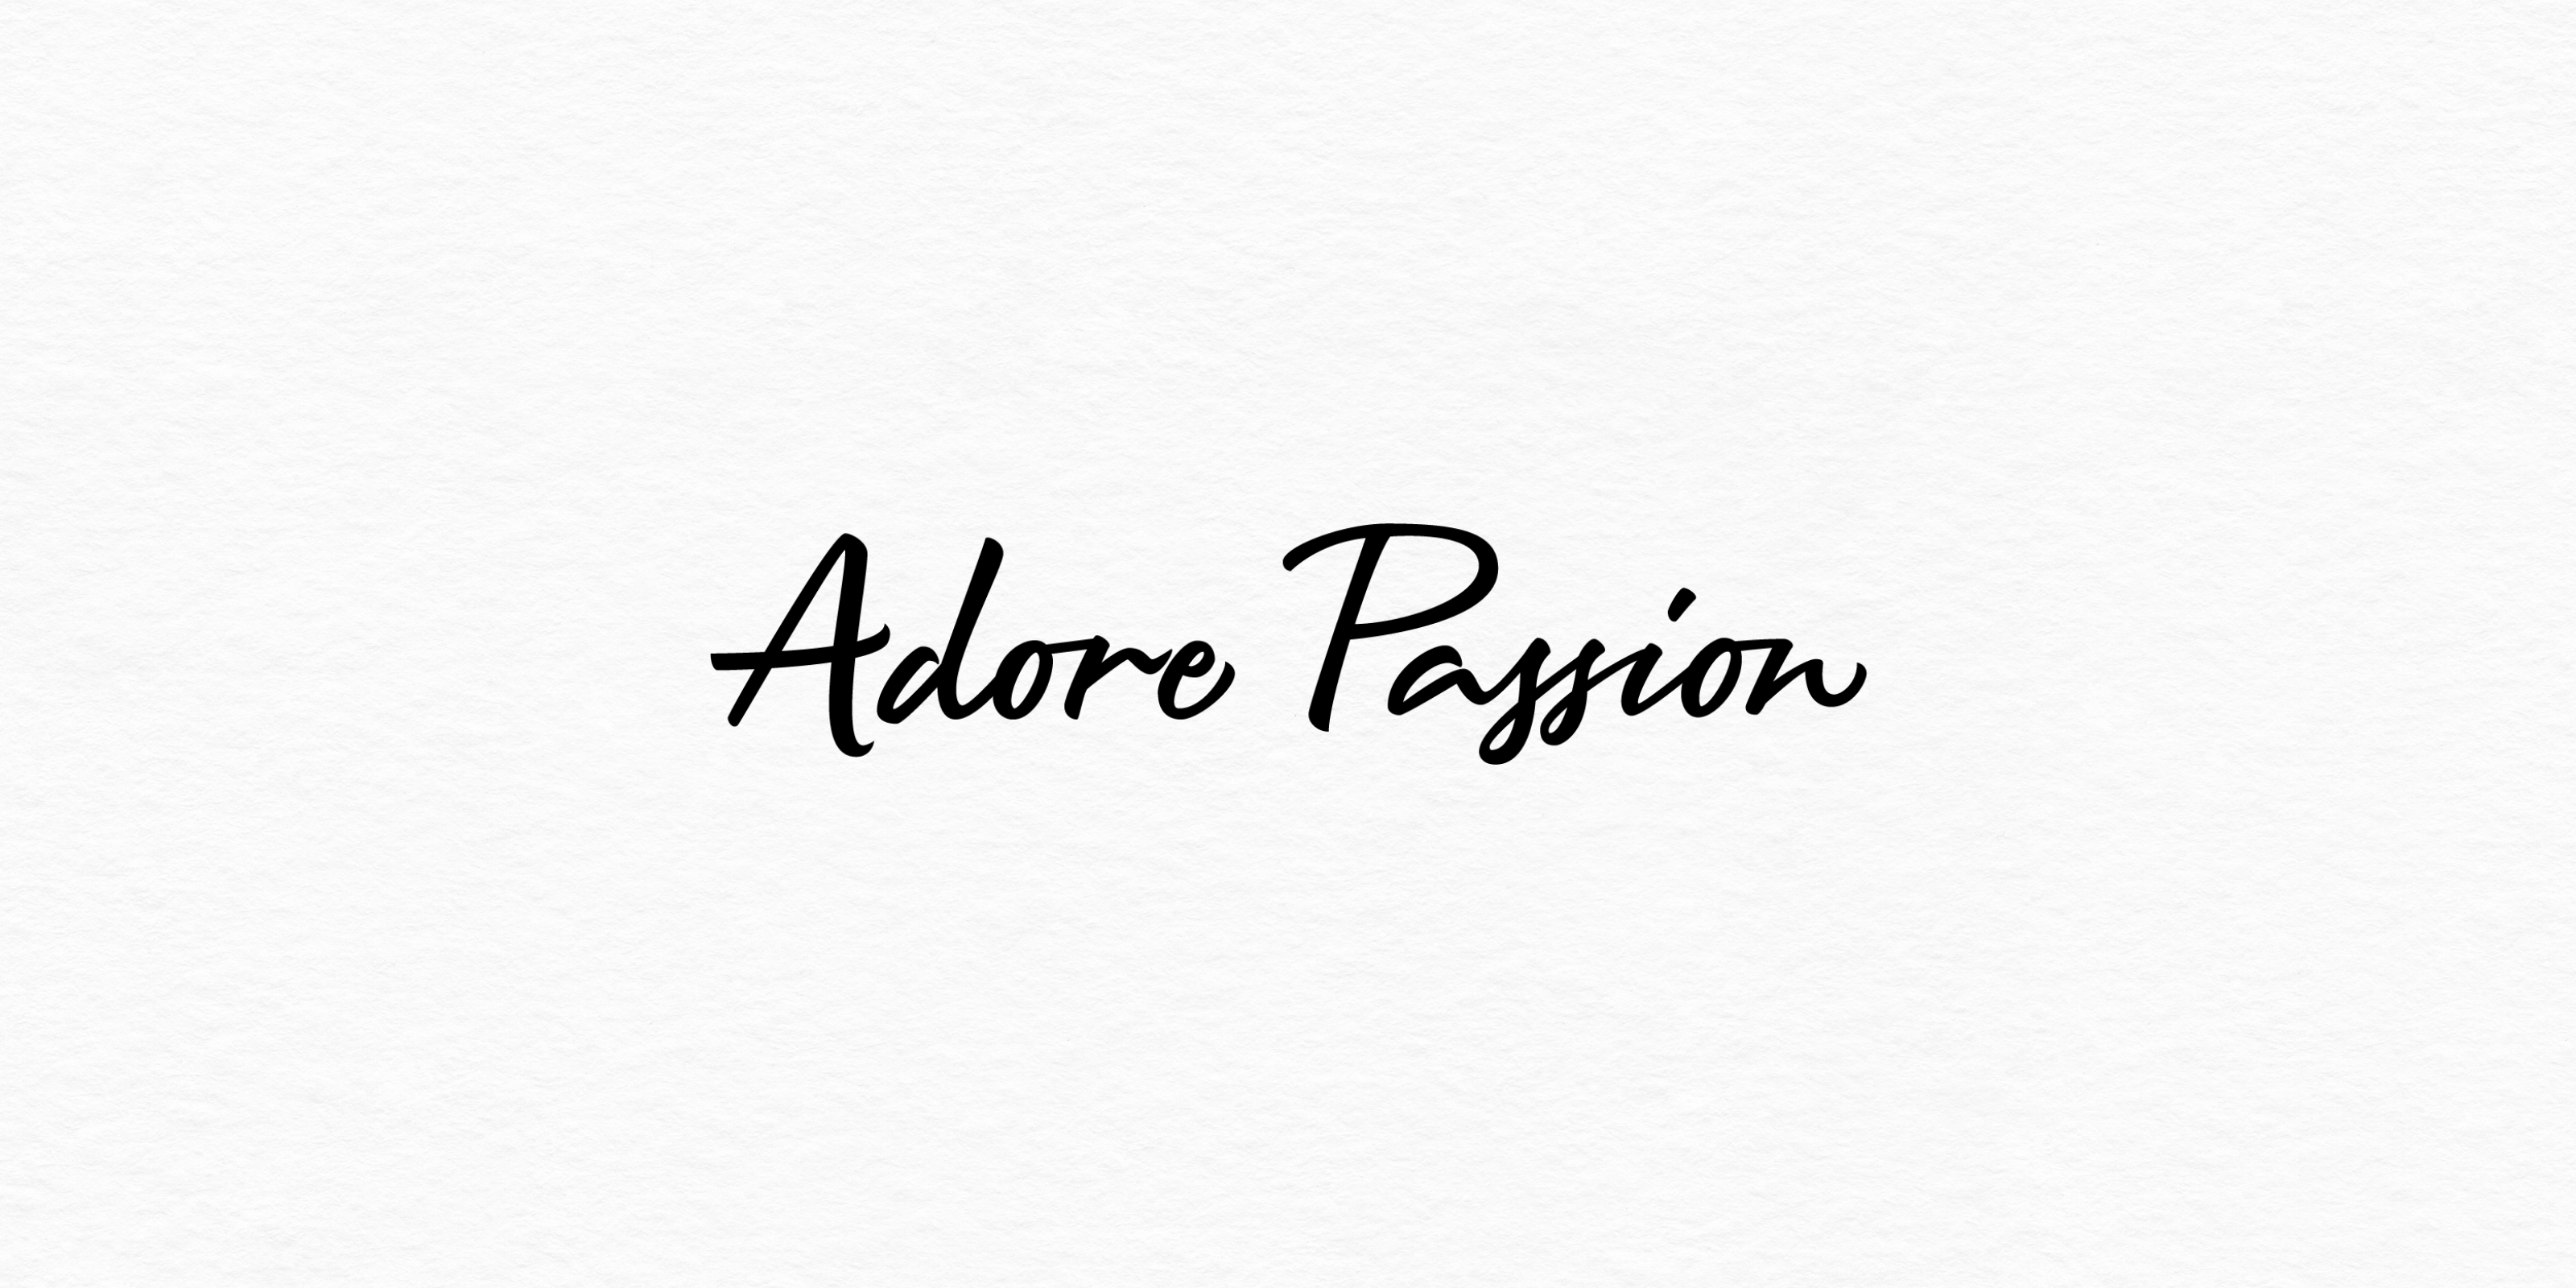 Modern calligraphic logo Adore Passion